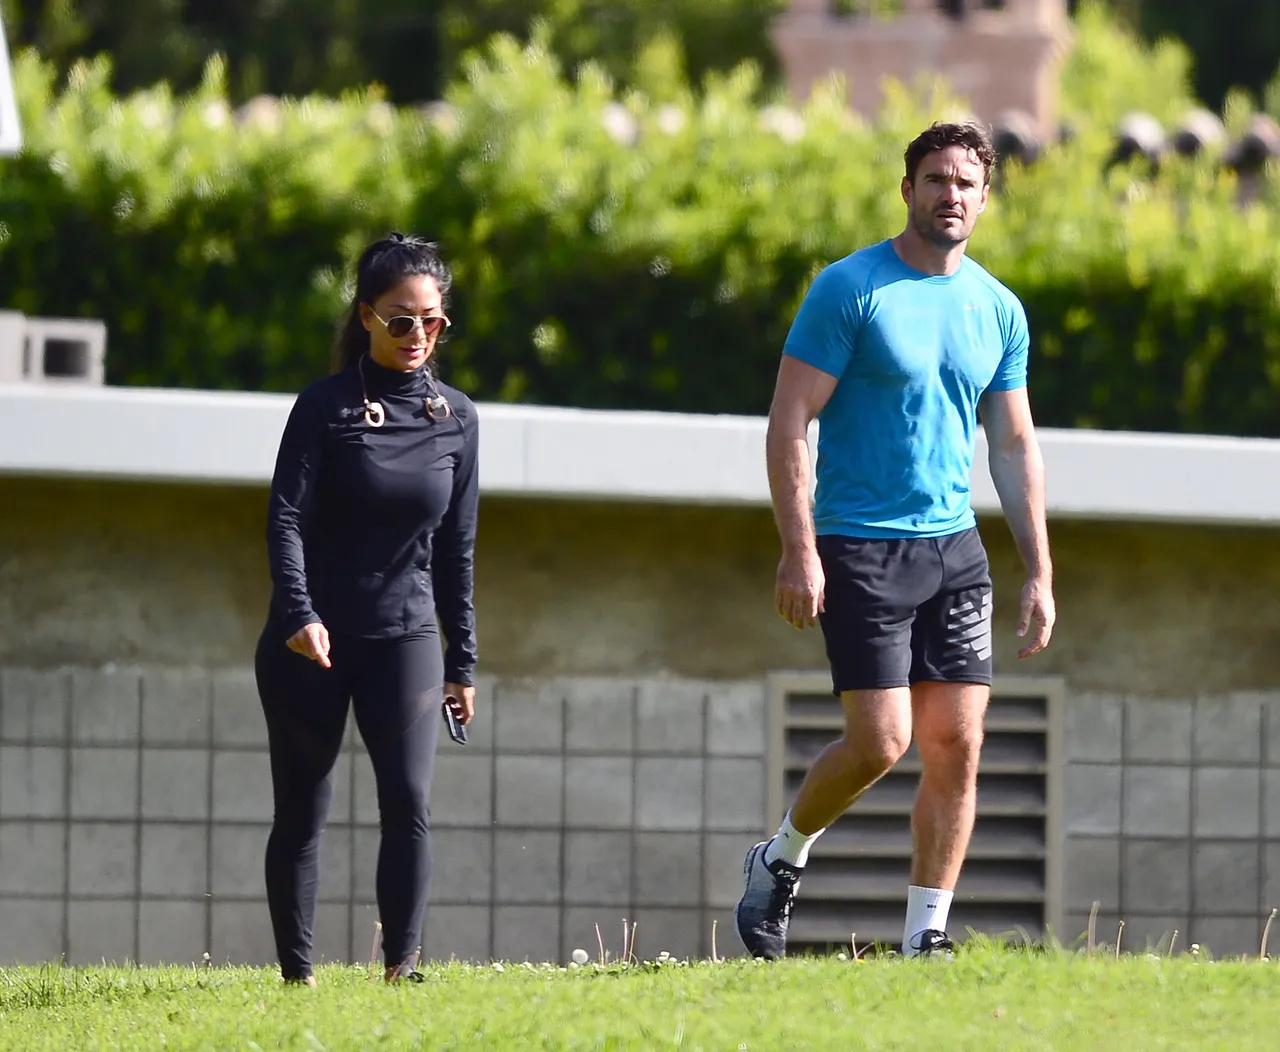 EXCLUSIVE: Nicole Scherzinger &amp; Thom Evans work up a sweat in an LA park on together!